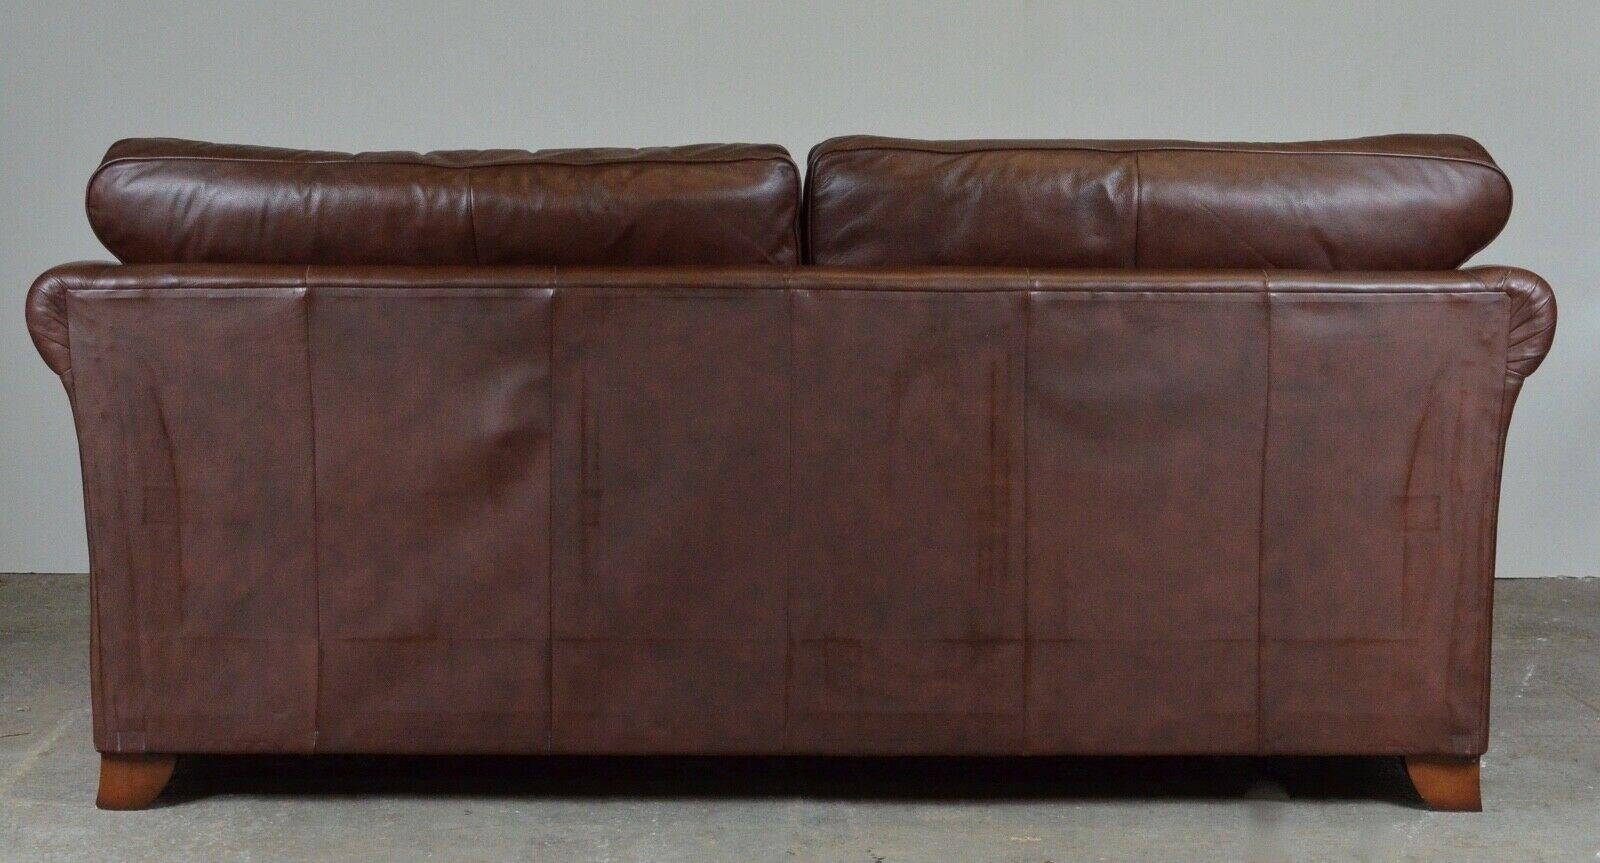 m&s leather sofas